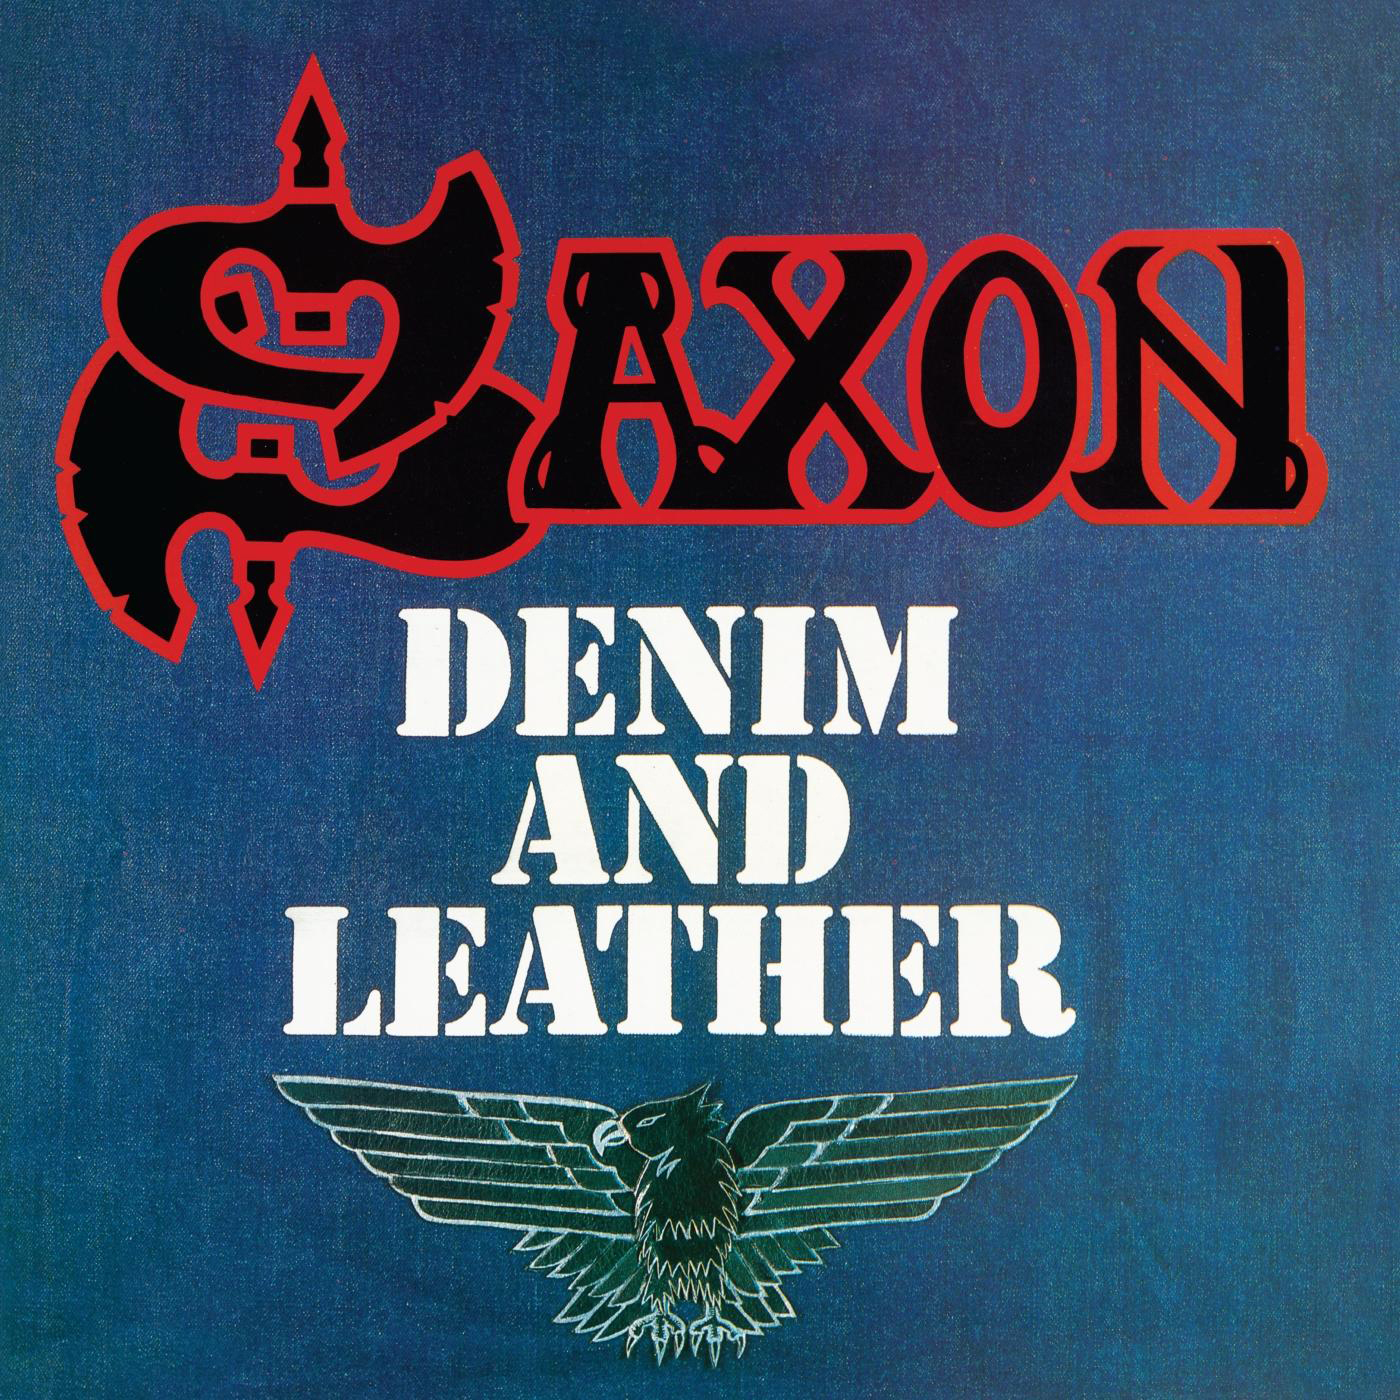 Saxon - Leather - Denim and (Vinyl)